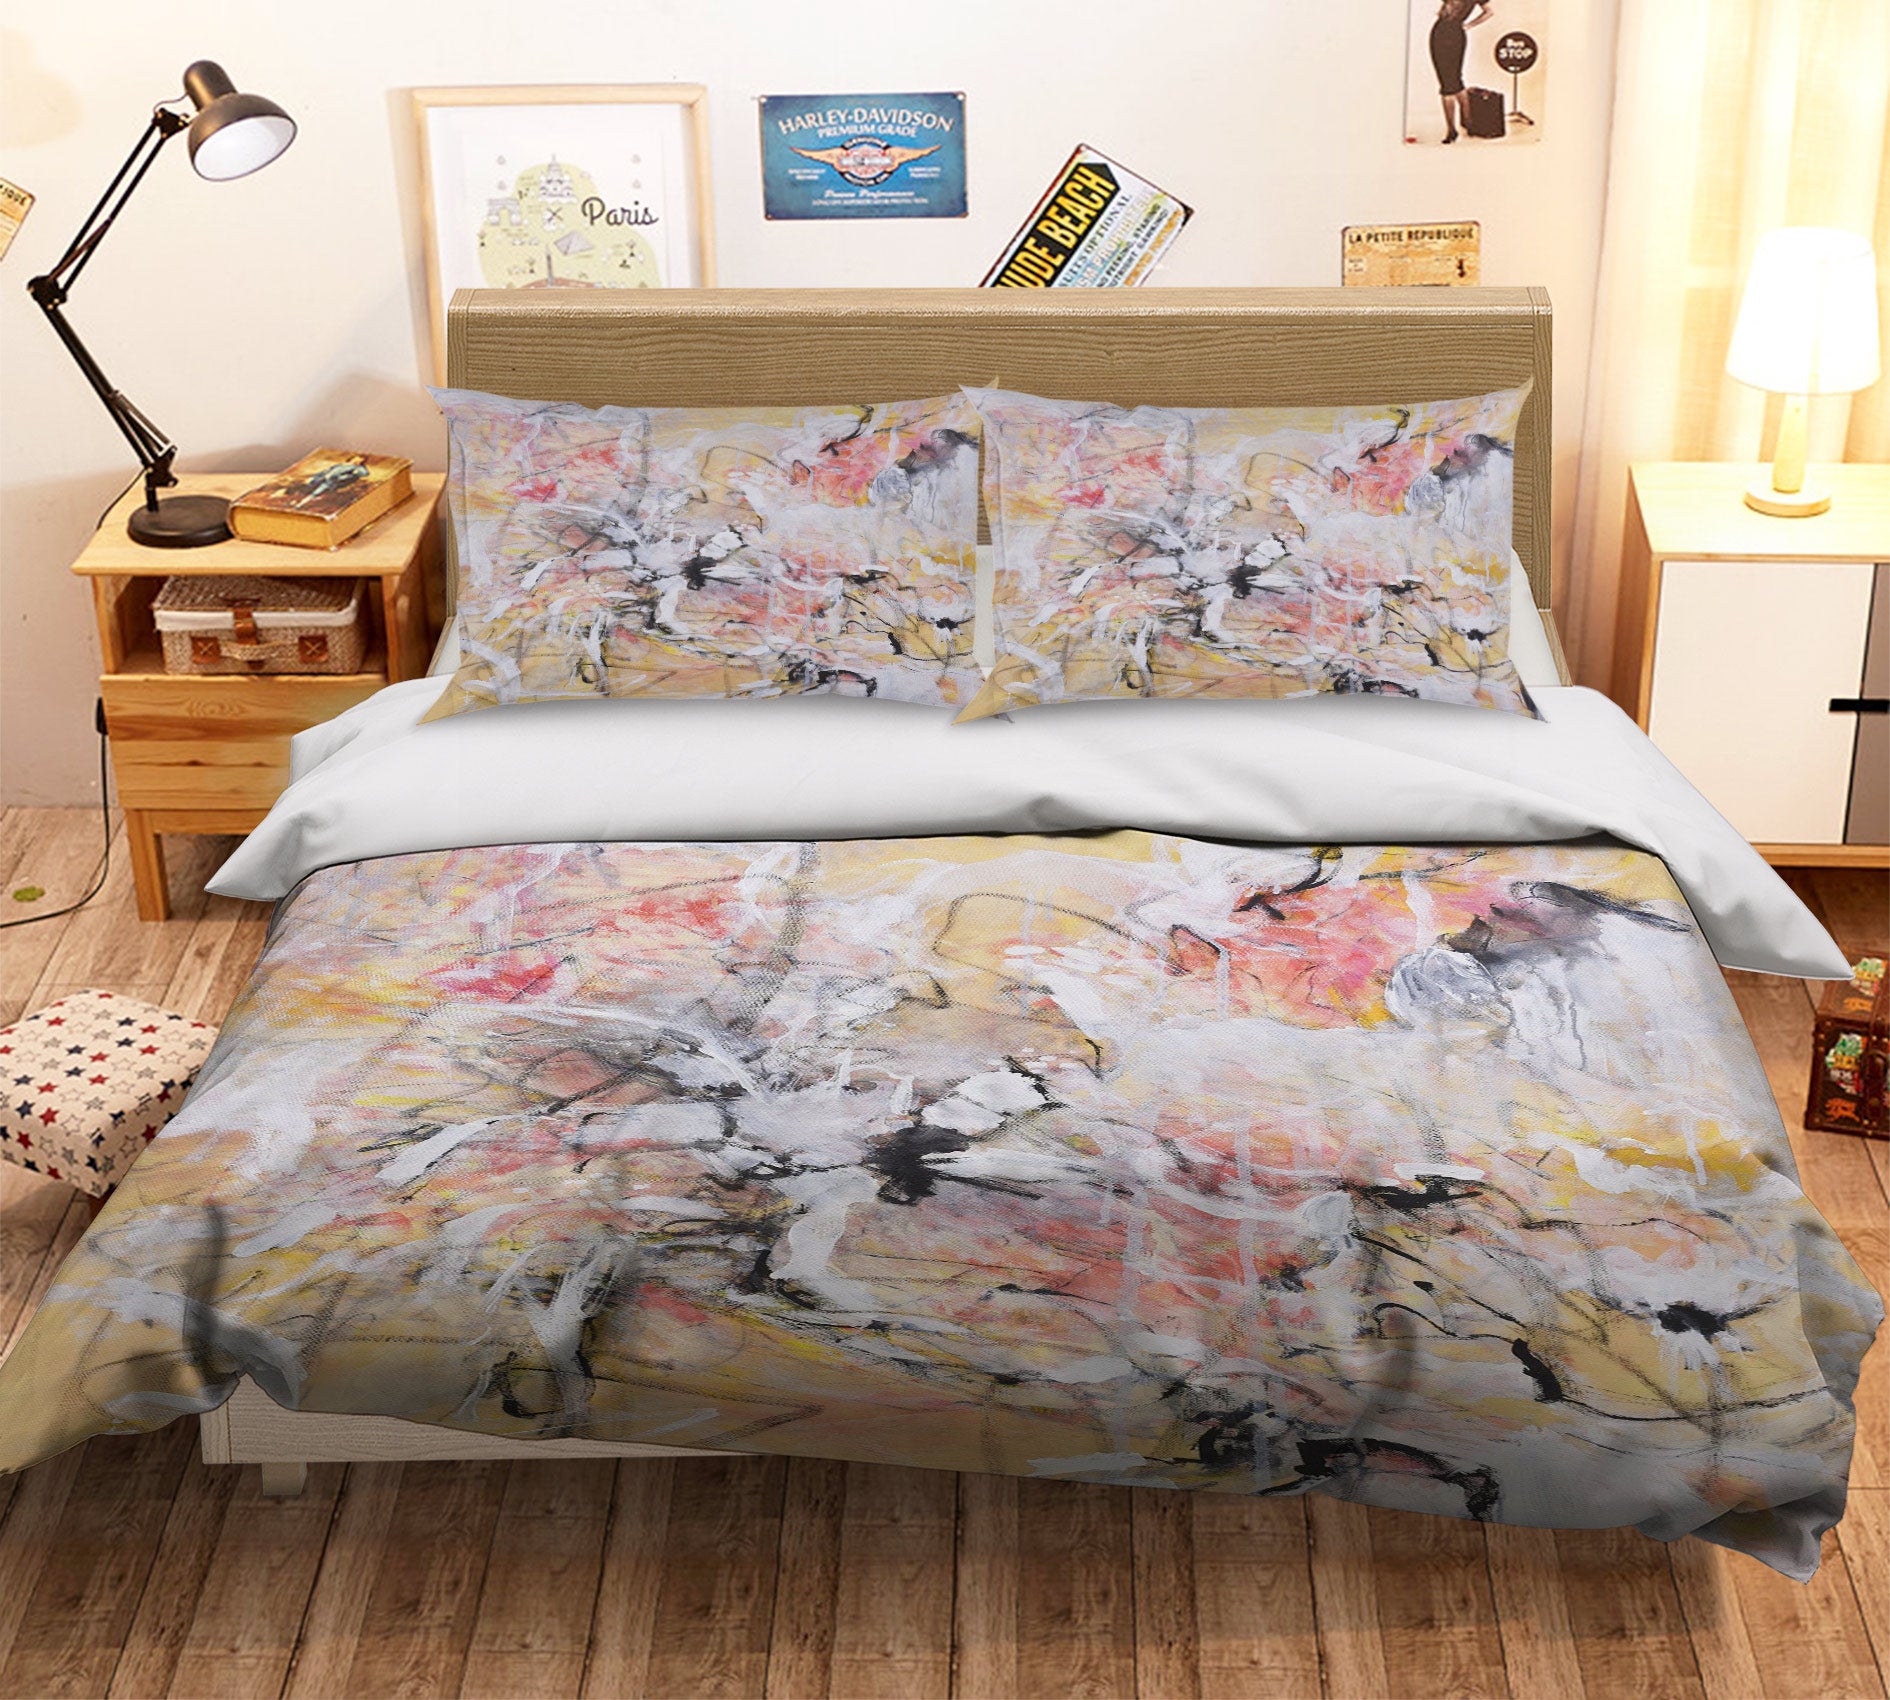 3D Painted Graffiti 1163 Misako Chida Bedding Bed Pillowcases Quilt Cover Duvet Cover